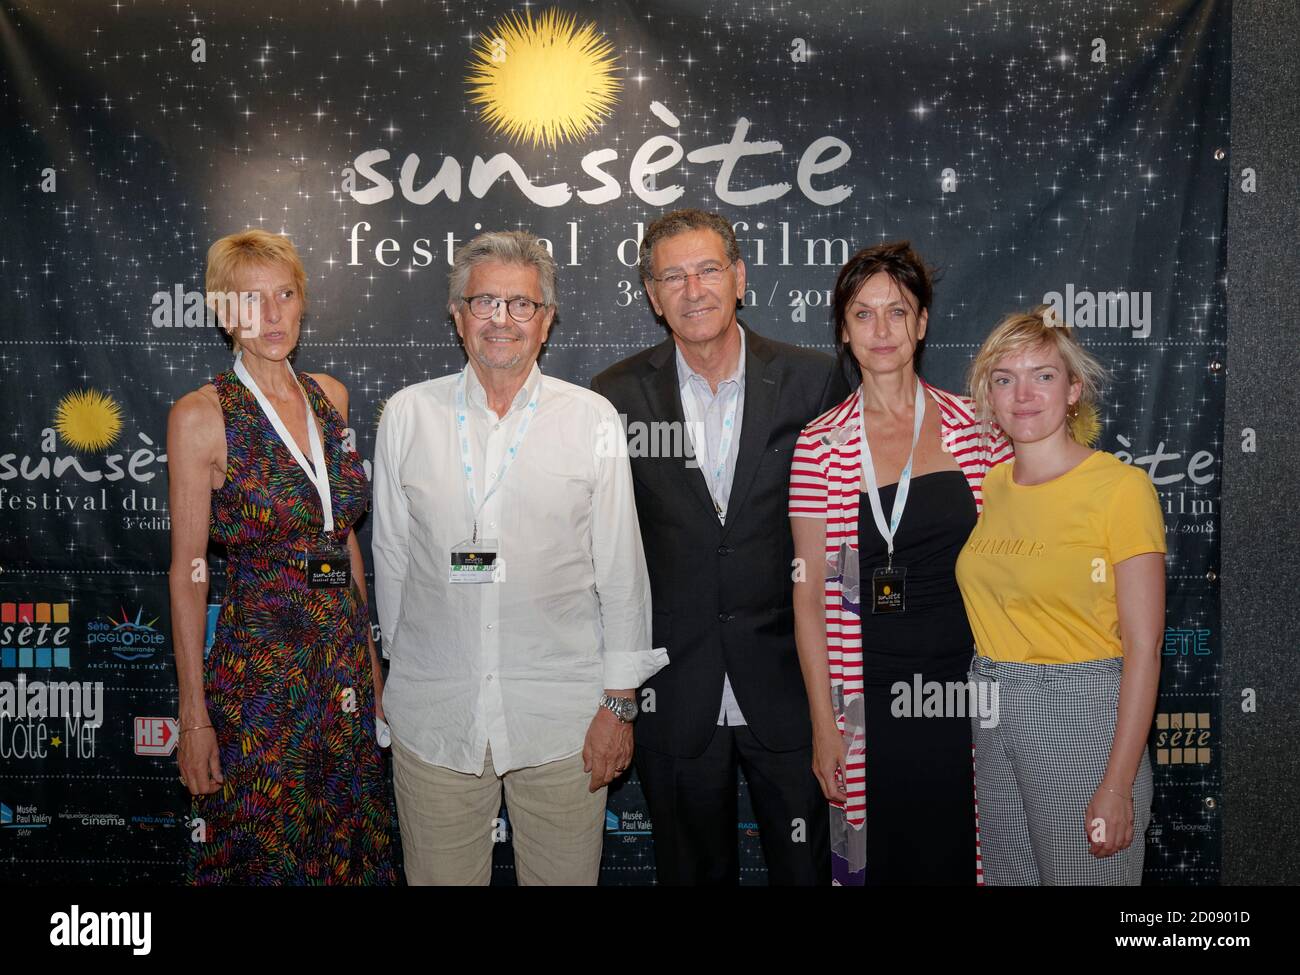 Sete, France.2018.Jeanne Corporon, Bernard Maleterre, Henri Cohen, Coralie Russier, Francoise Cadol in Sunsete Film Festival. Stock Photo